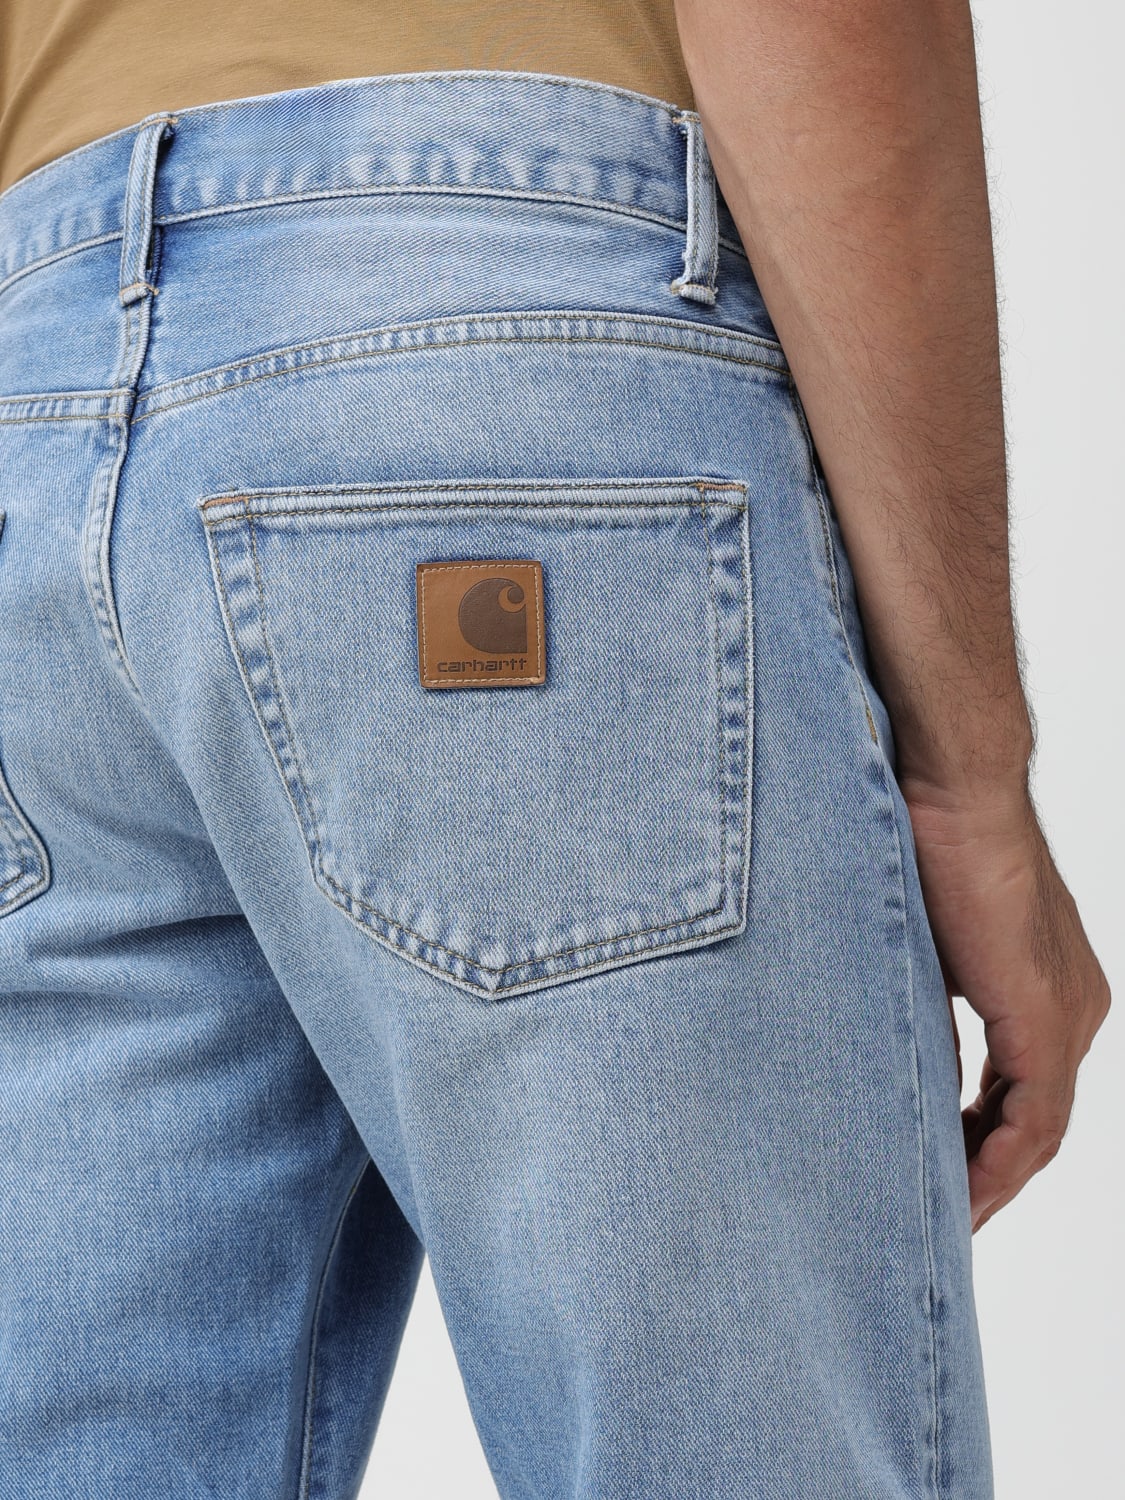 kollidere galdeblæren Glat CARHARTT WIP: pants for man - Blue 1 | Carhartt Wip pants I029207 online at  GIGLIO.COM